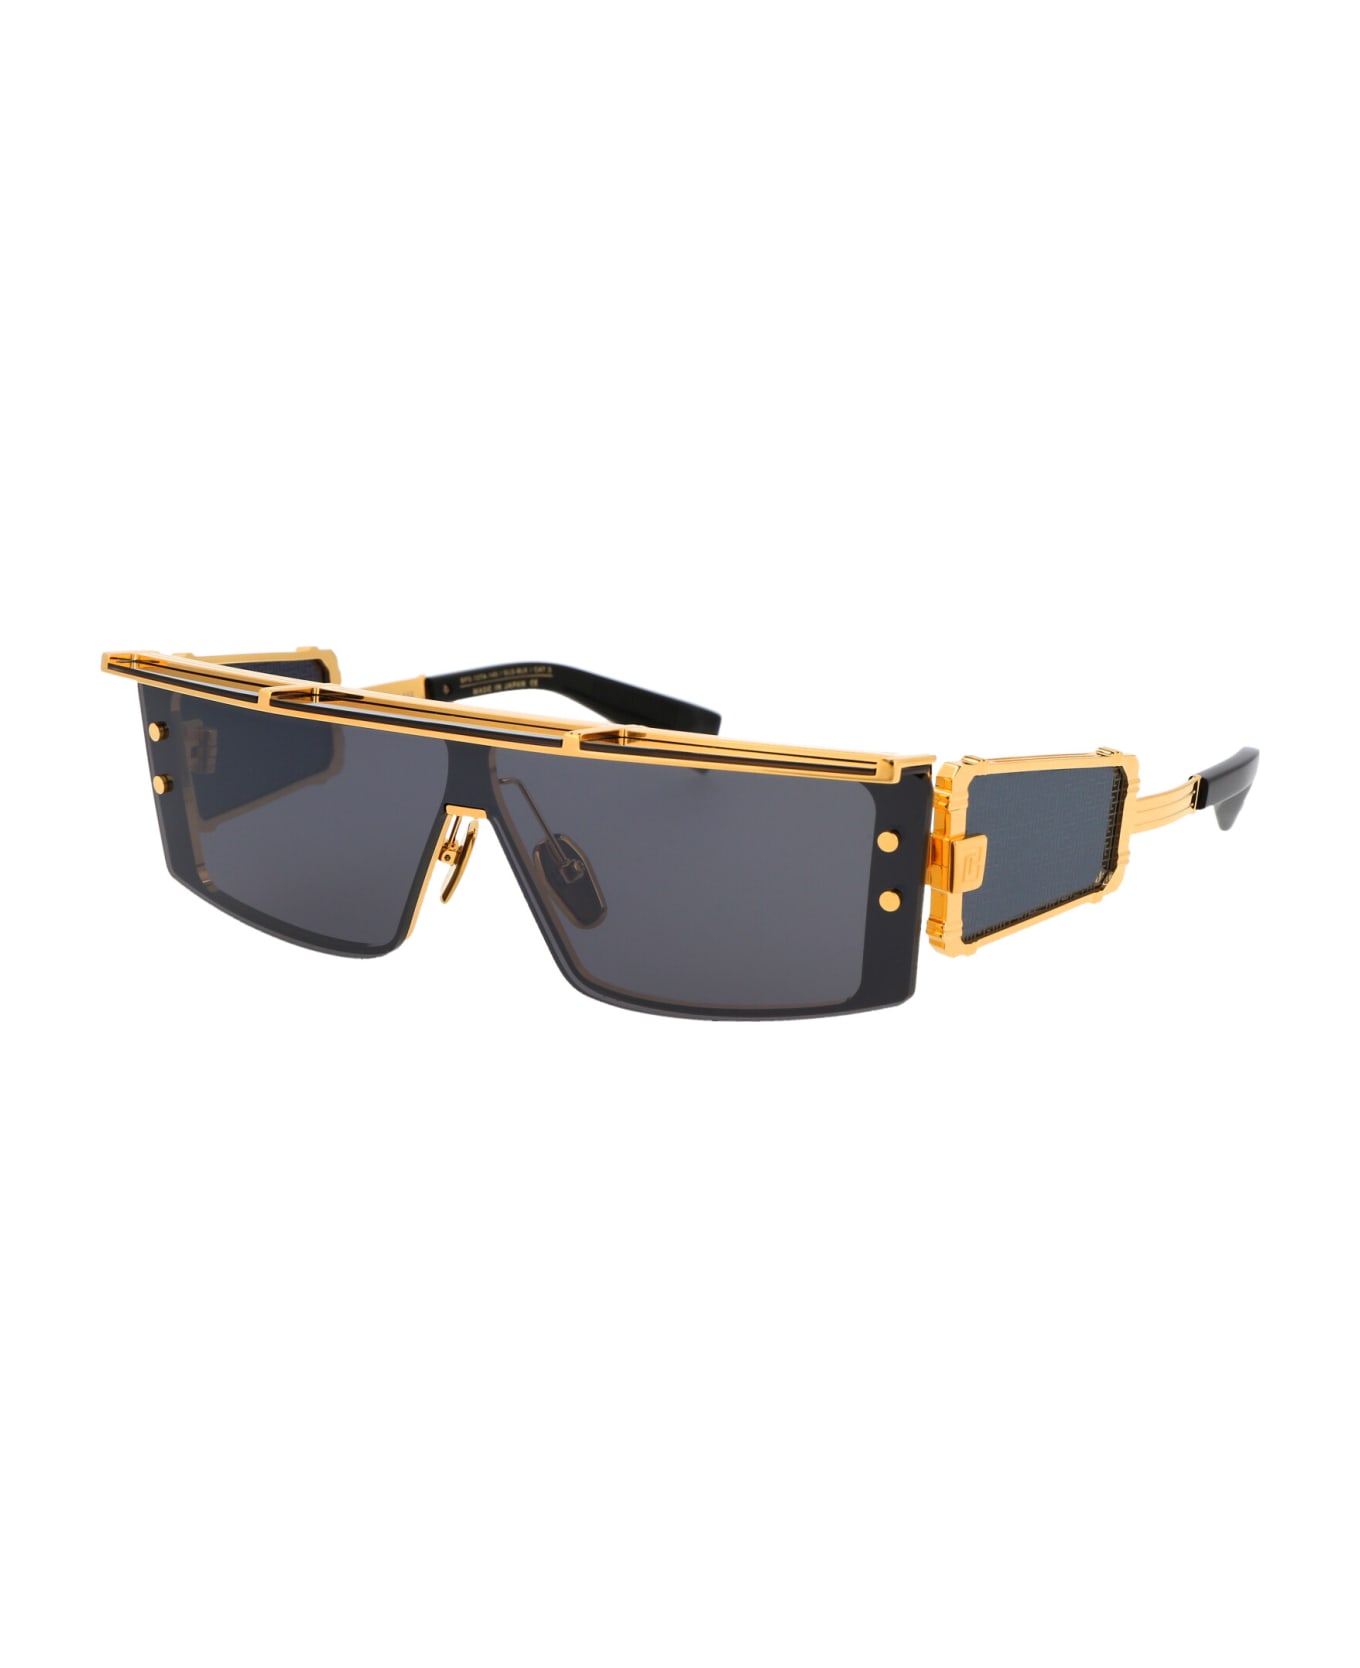 Balmain Wonder Boy Iii Sunglasses - GOLD - BLACK w/ DARK GREY SHIELD